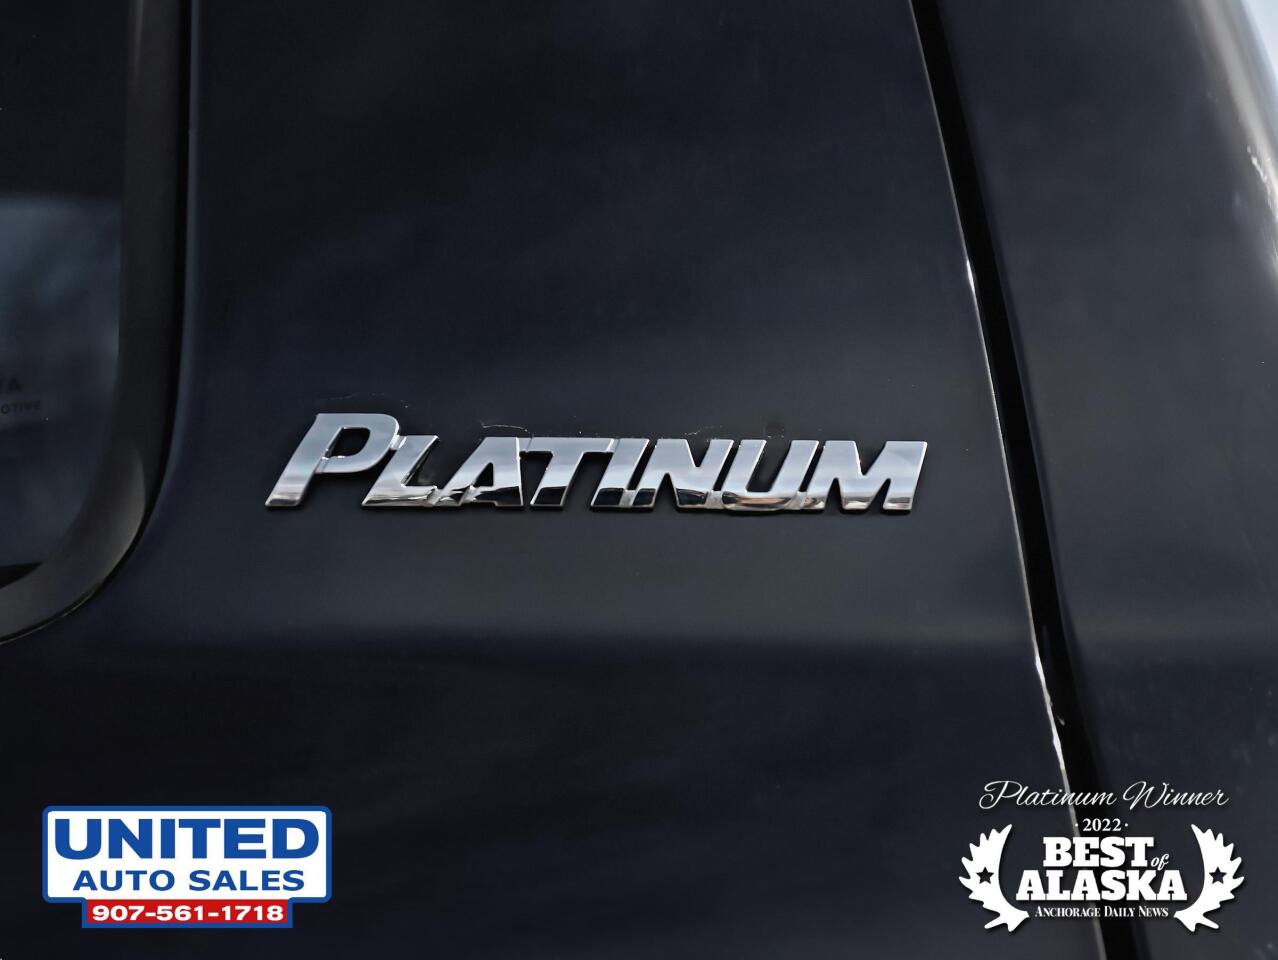 2013 Toyota Tundra Platinum 4x4 4dr CrewMax Cab Pickup SB (5.7L V8) 31